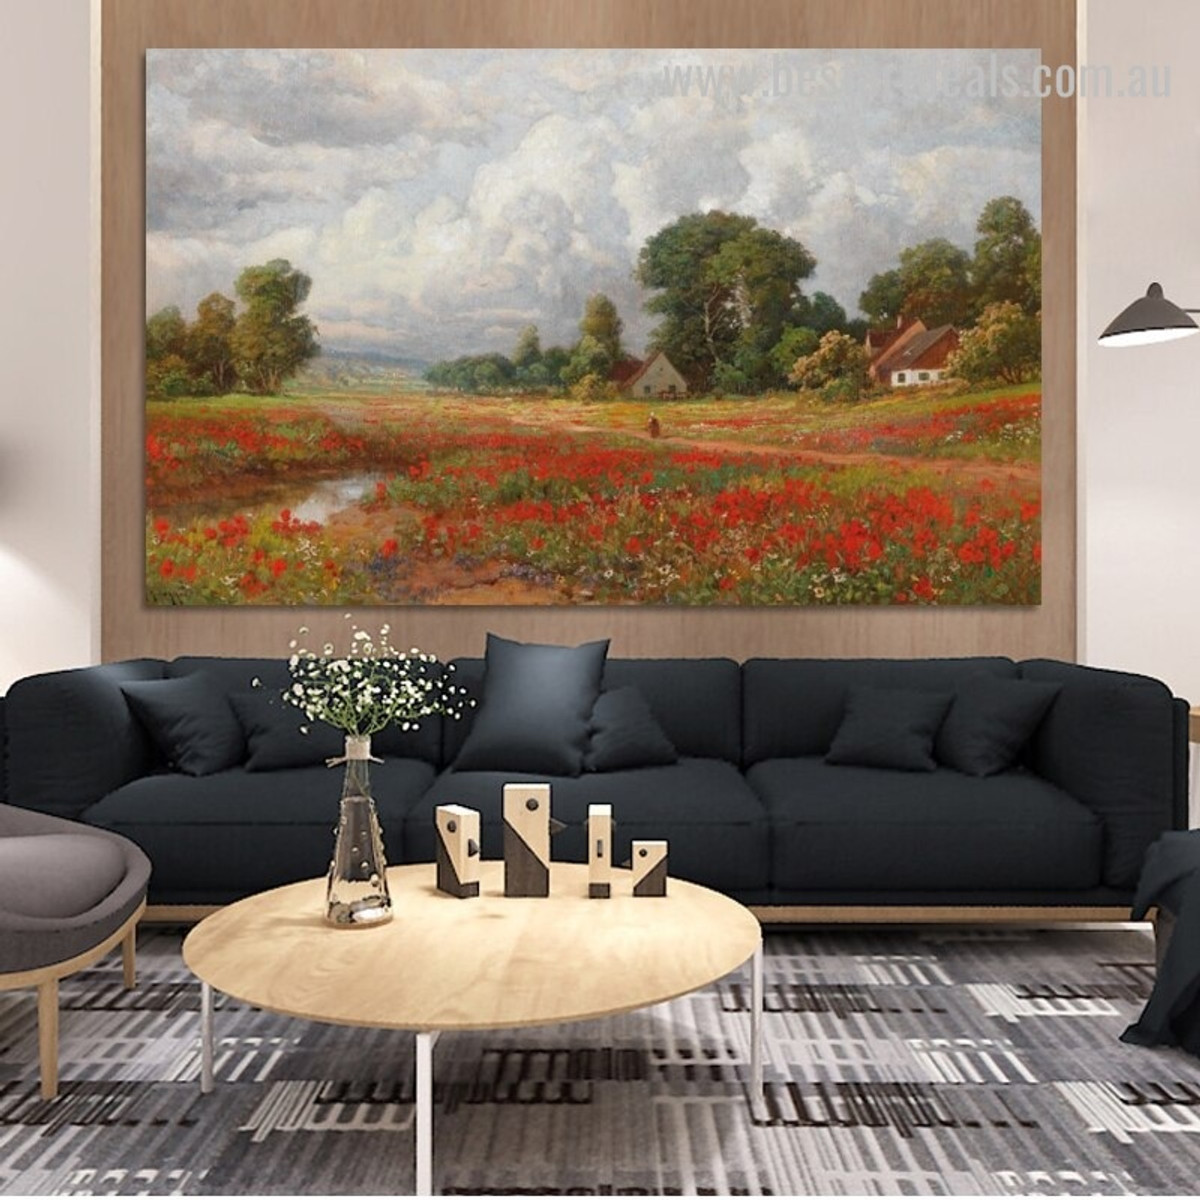 Buy Field of Poppies Canvas Print Wall Art Decor.